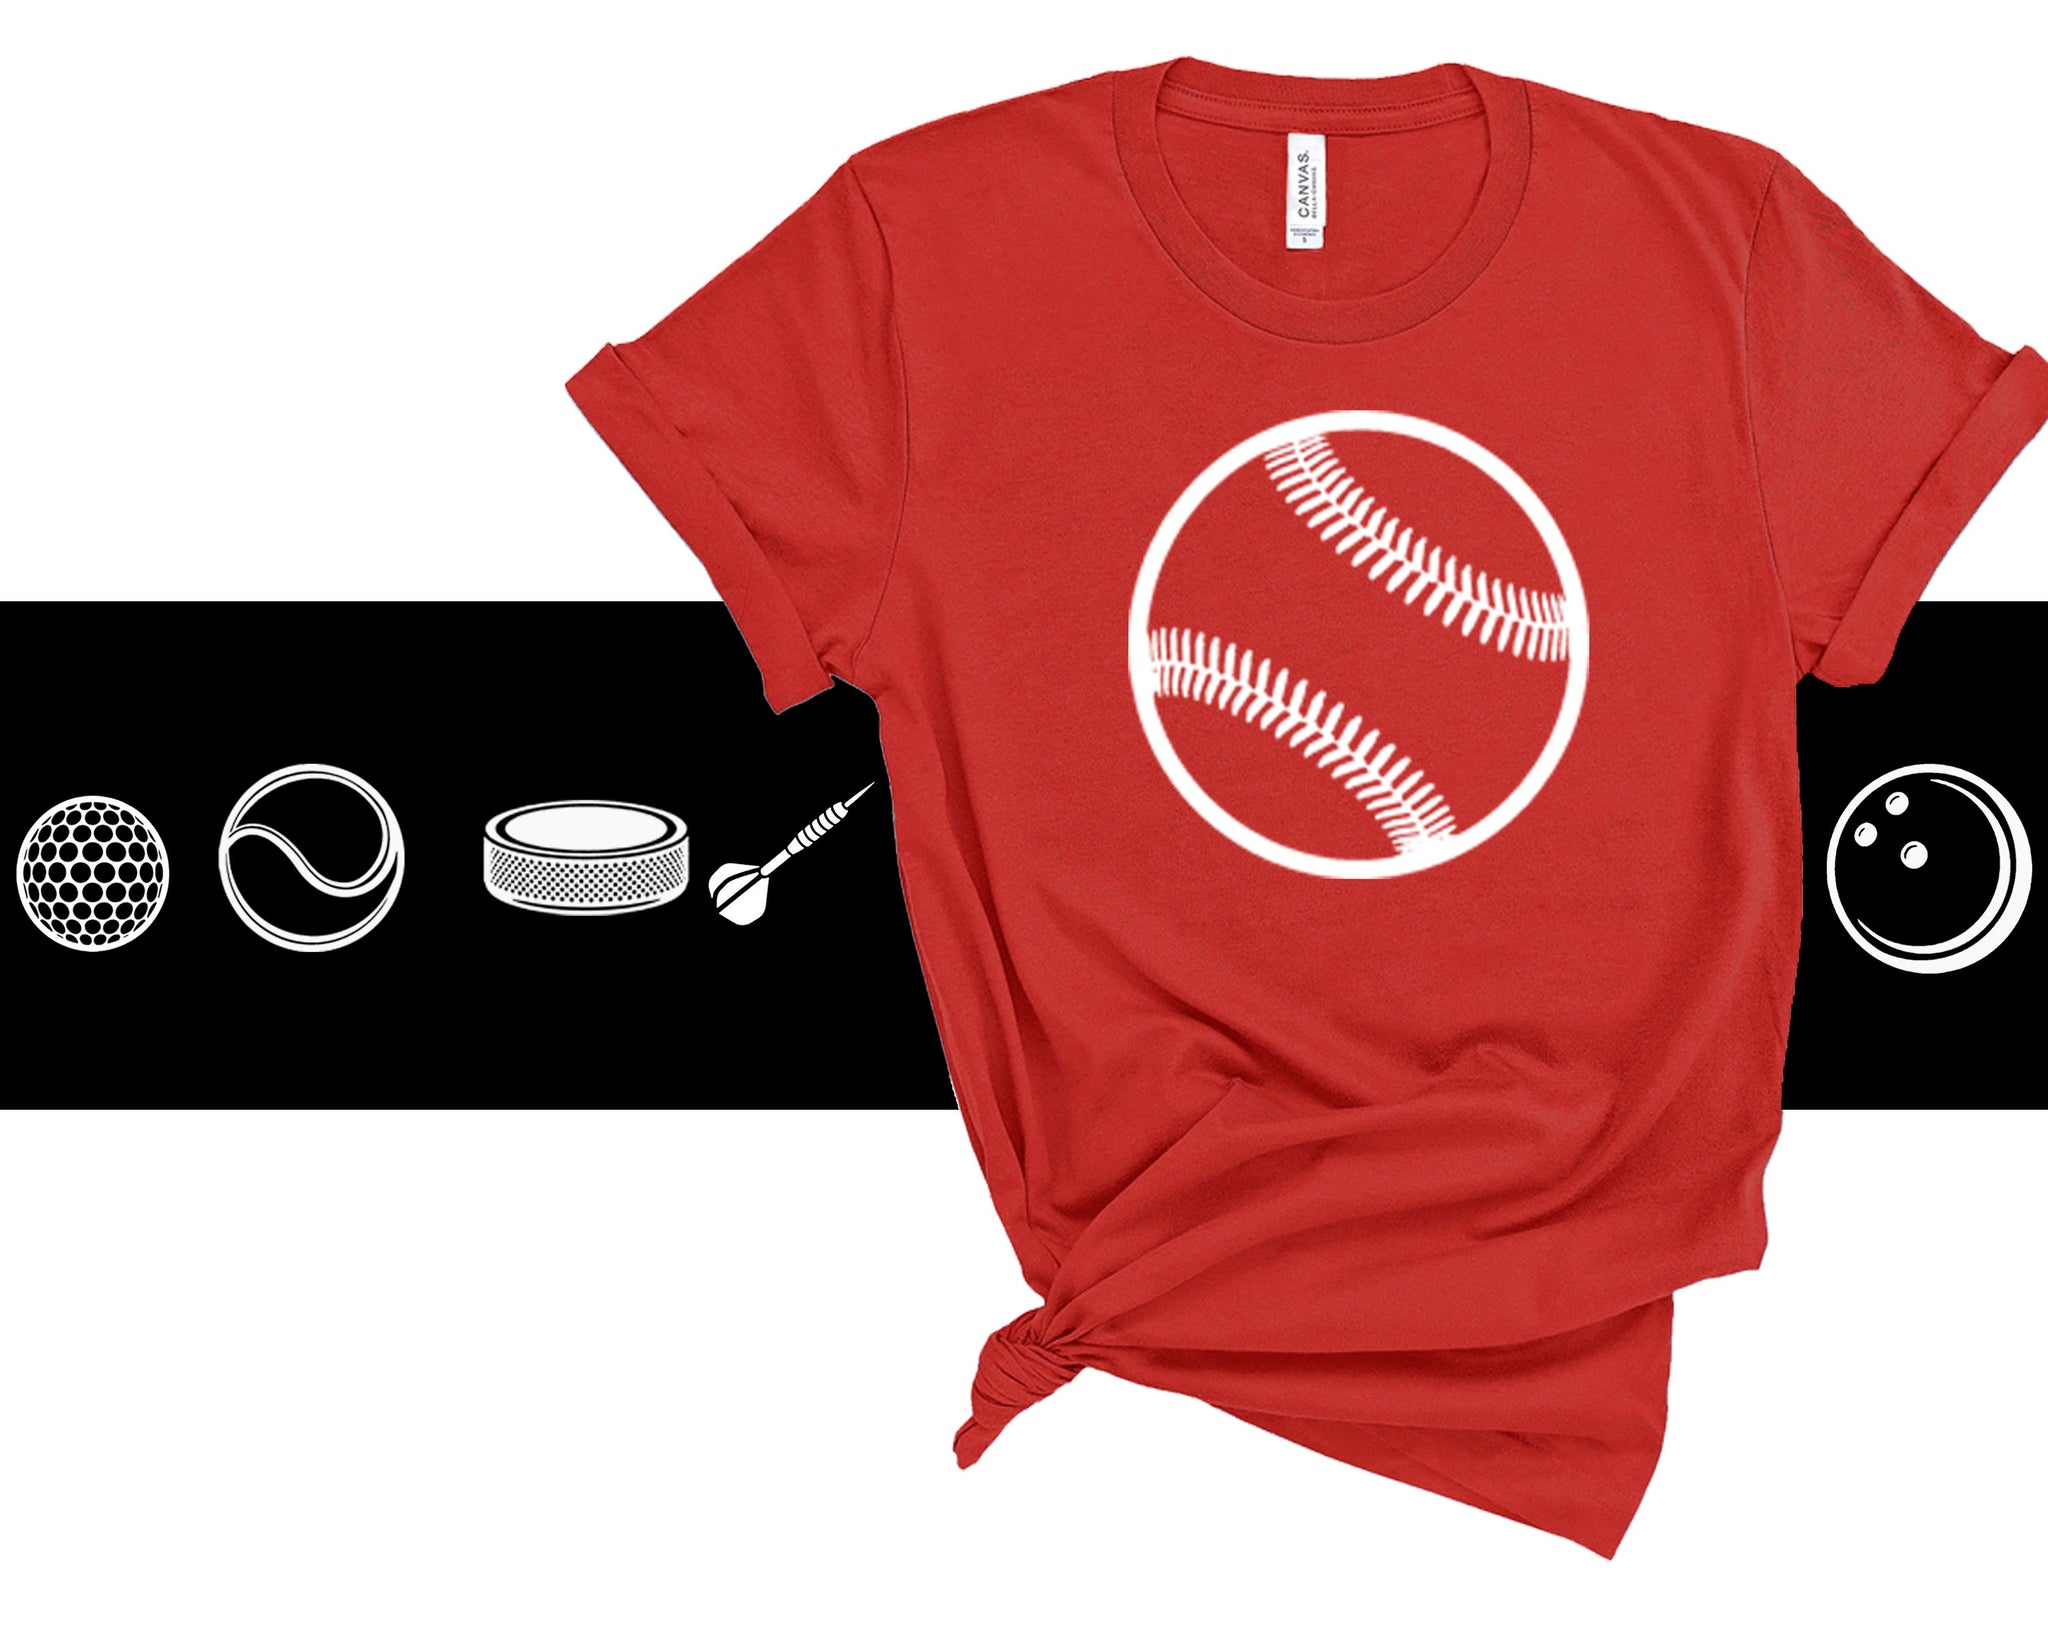 Sports Ball Shirt, Ball Shirts,American Football Shirt, Basketball Shirt, Tennis Ball Shirts, Golf Ball Shirt,Best Gift Shirt, Soccer Shirts